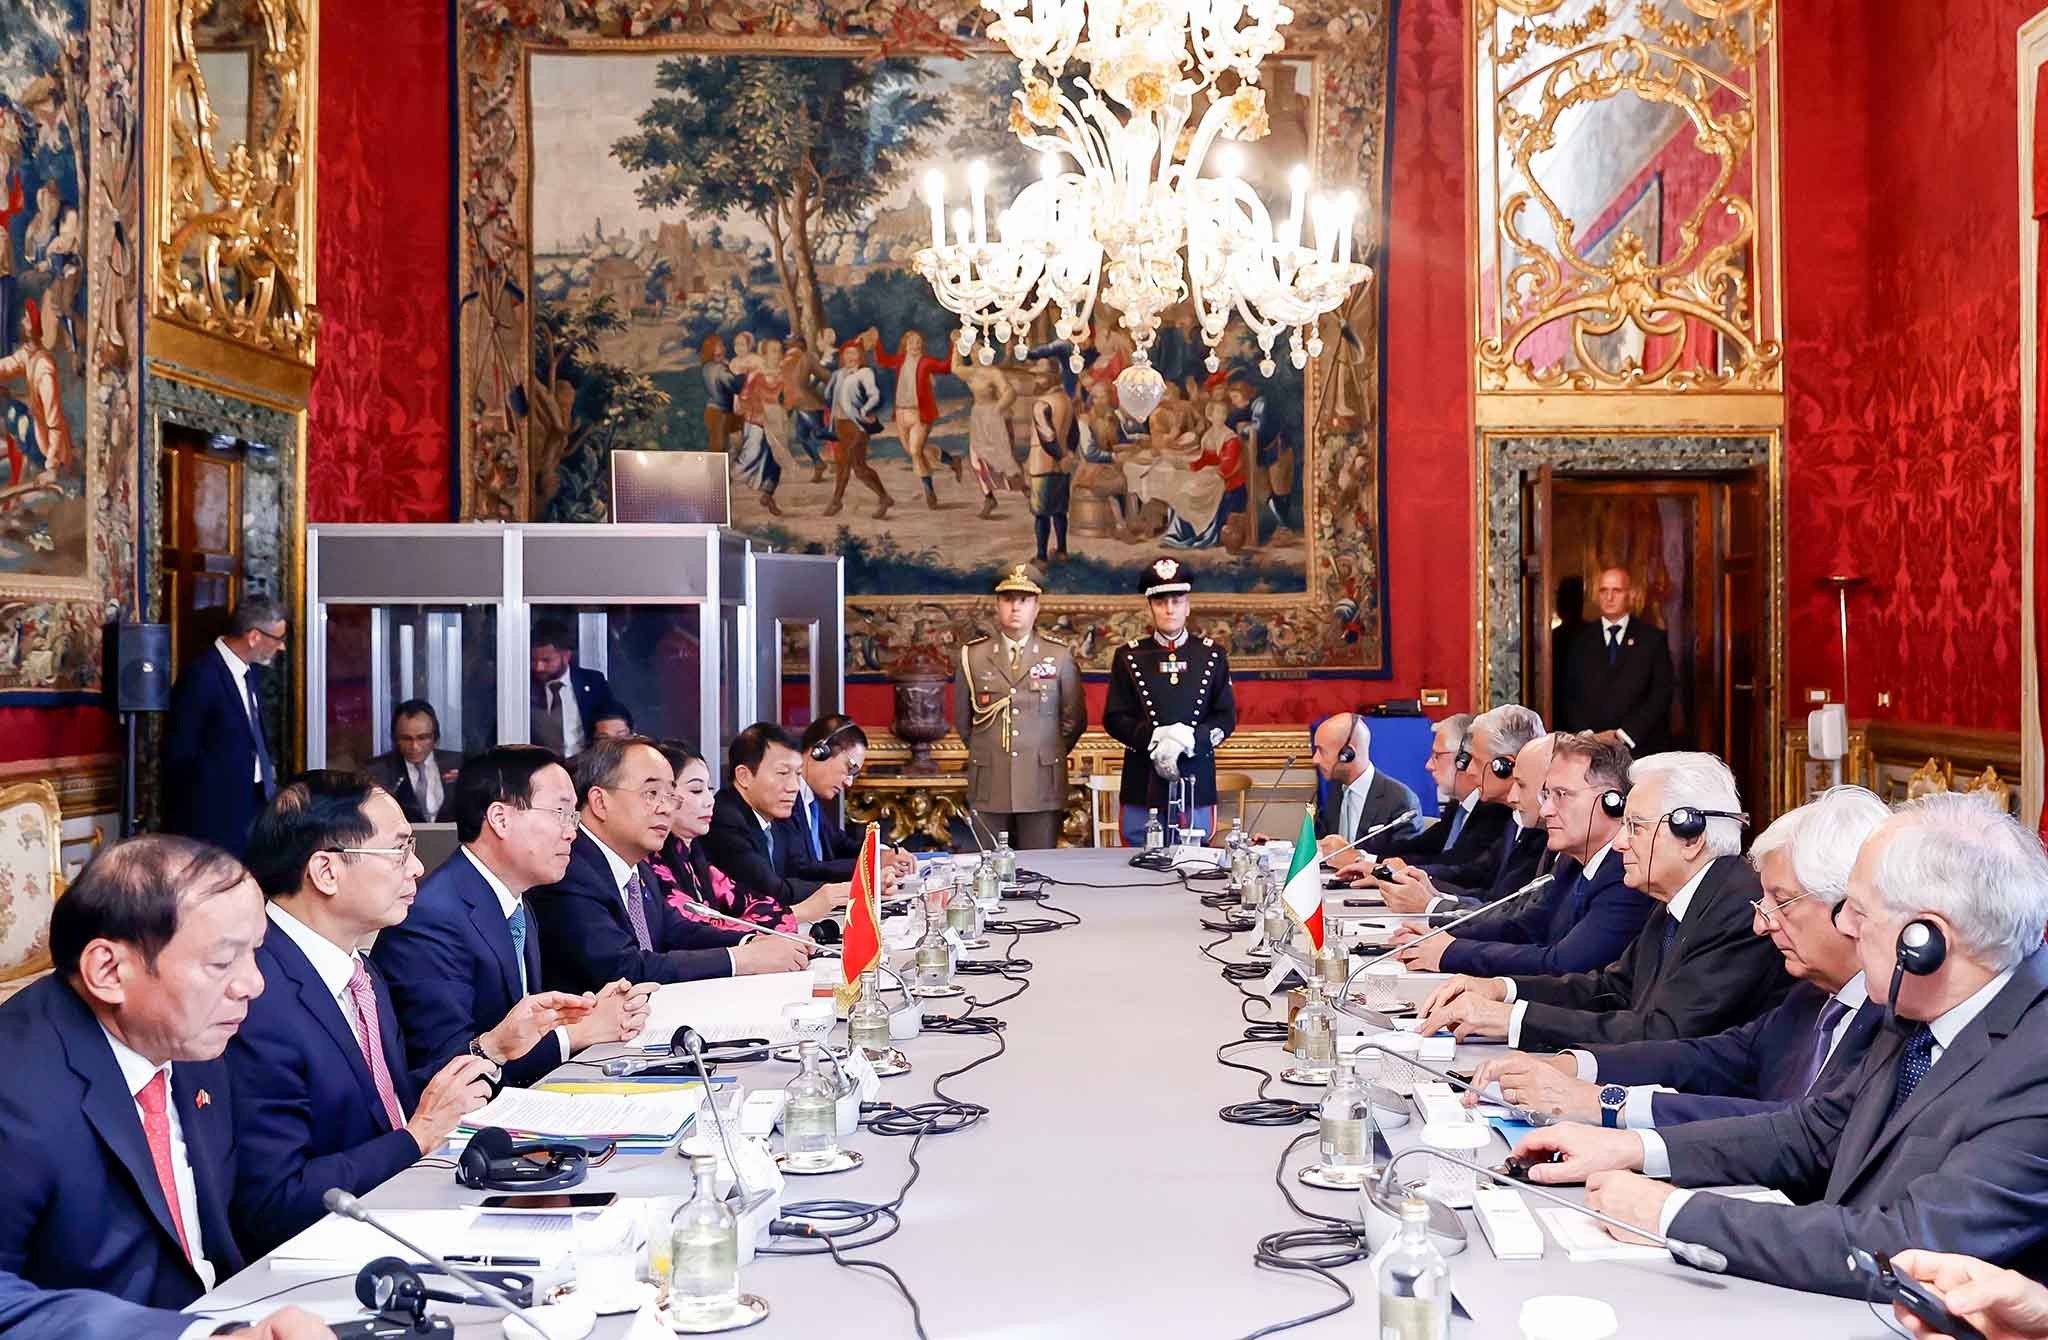 President Vo Van Thuong’s State visit opening new era of cooperation: Italian press